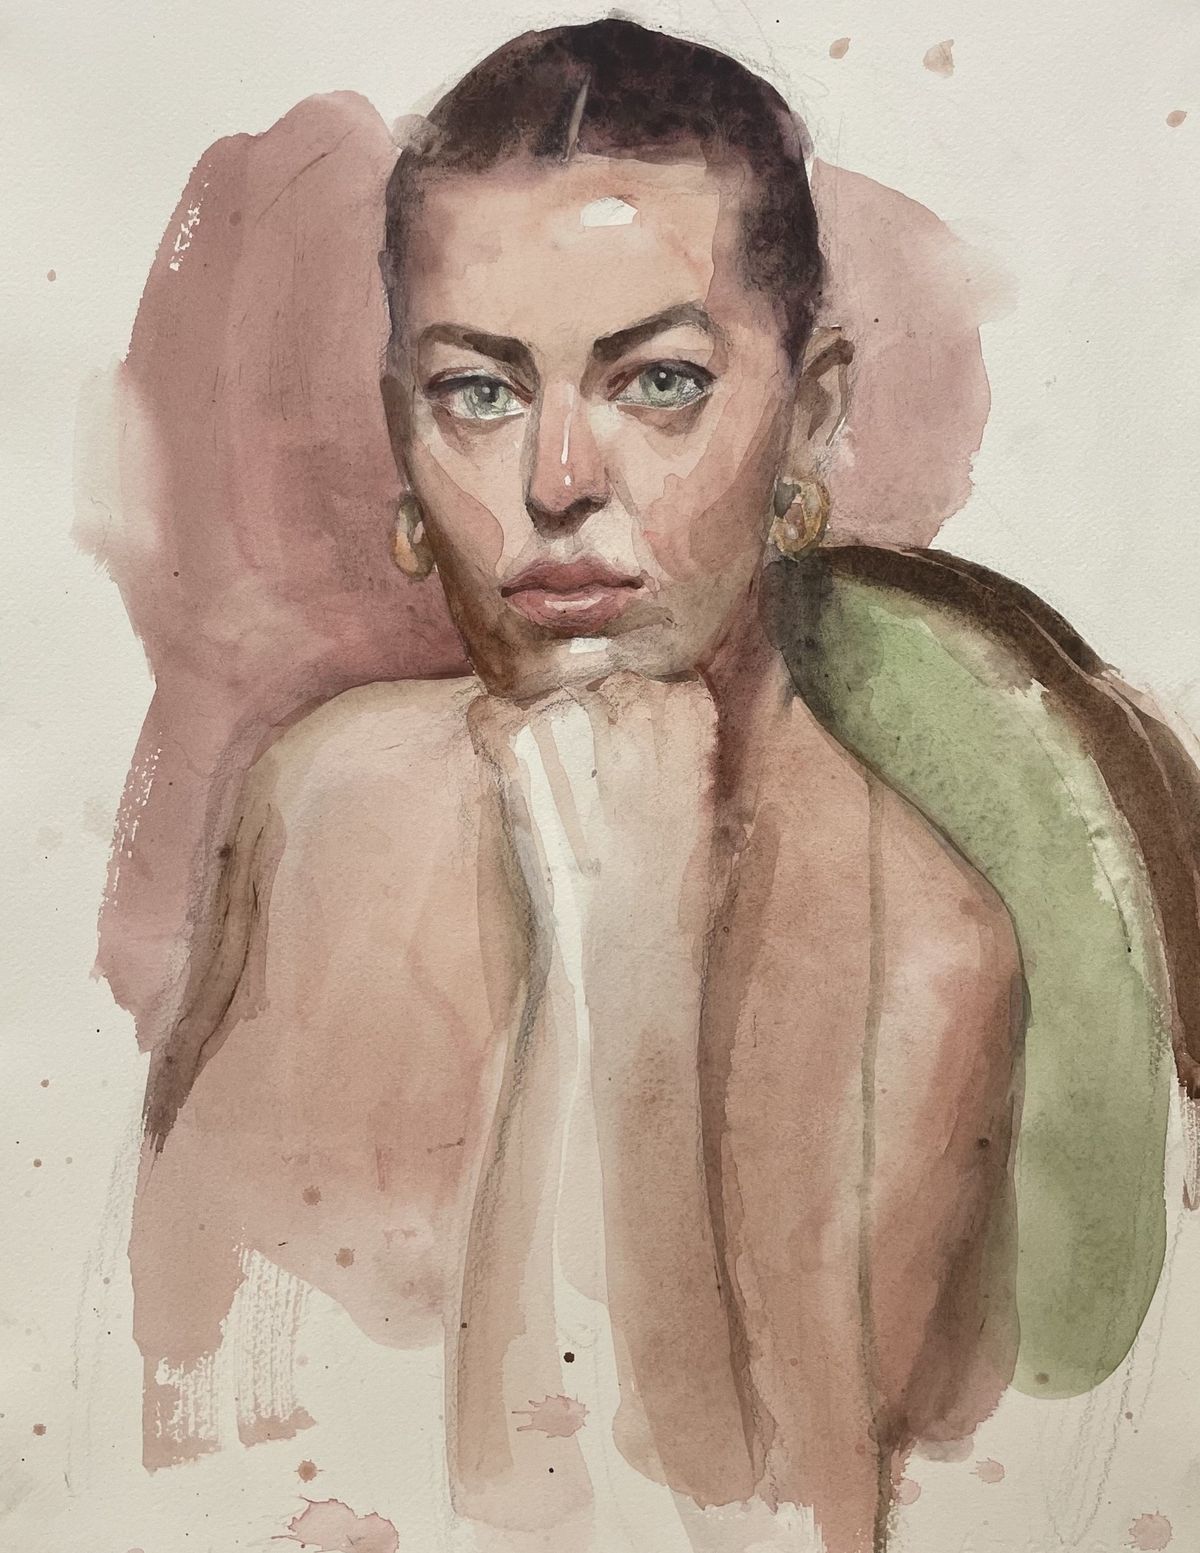 The Portrait in Watercolor - Workshop